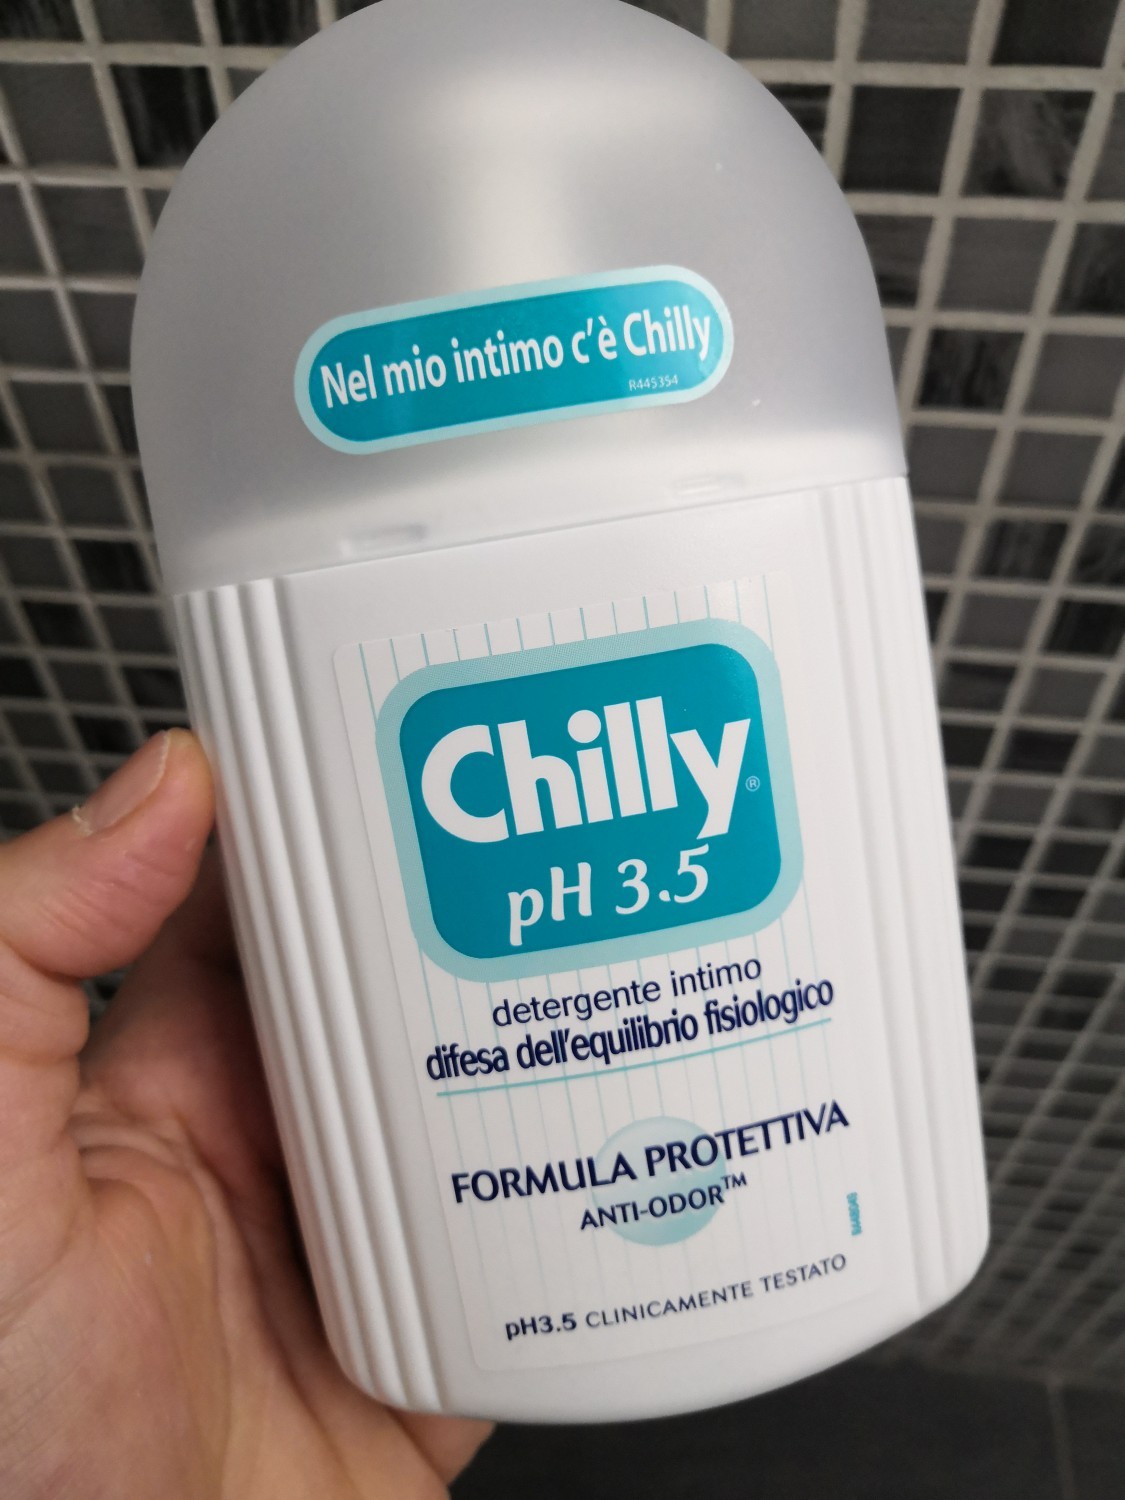 Chilly ph 3.5